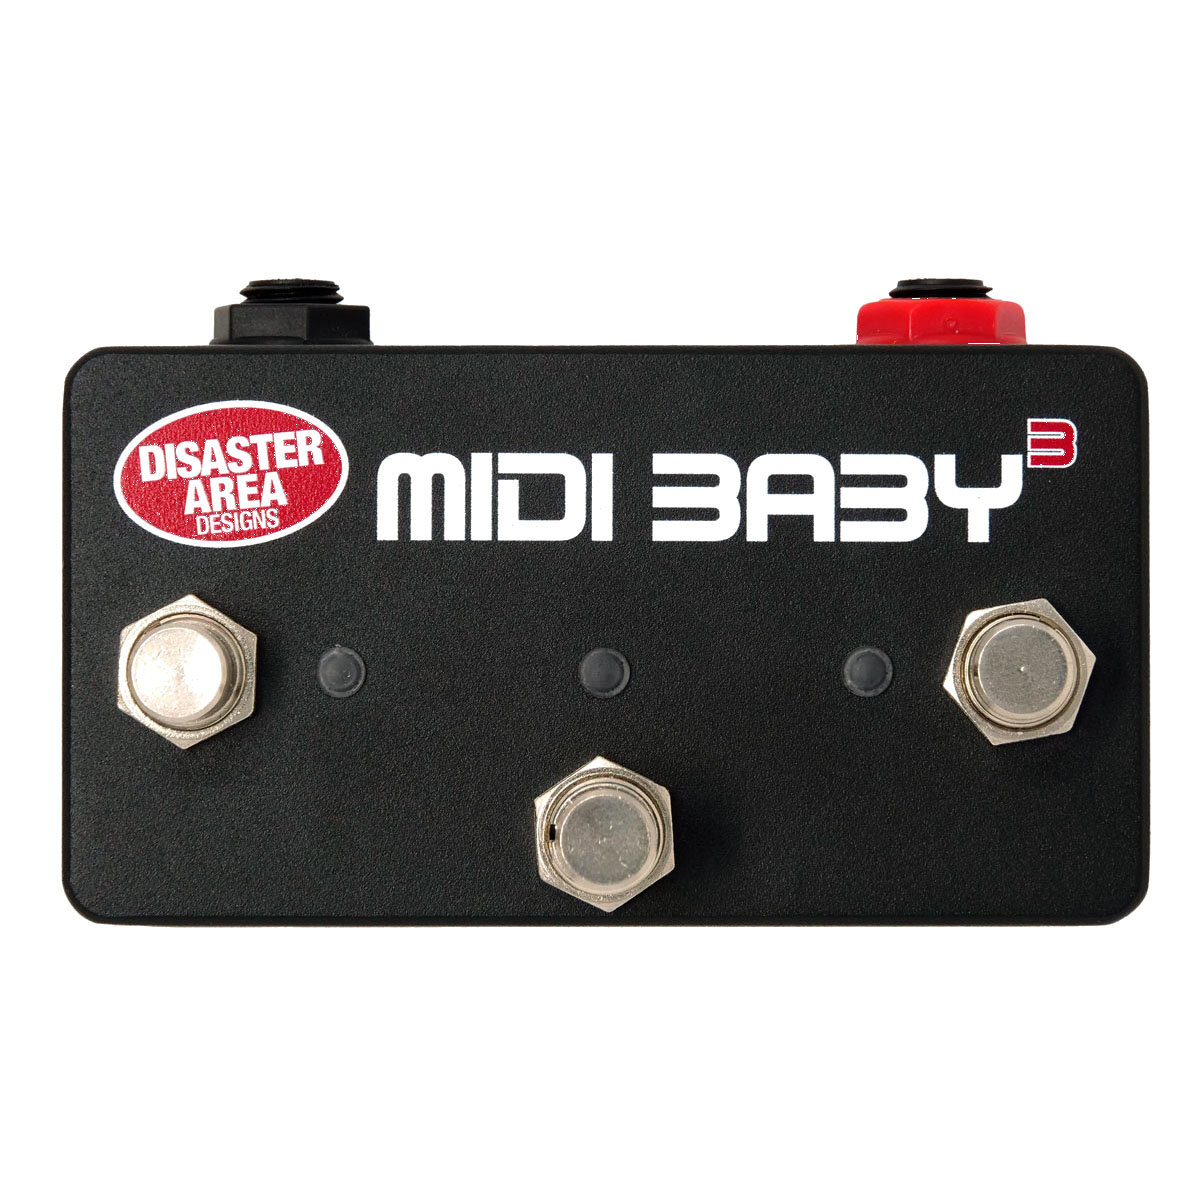 MIDI Baby 3 — Disaster Area Designs